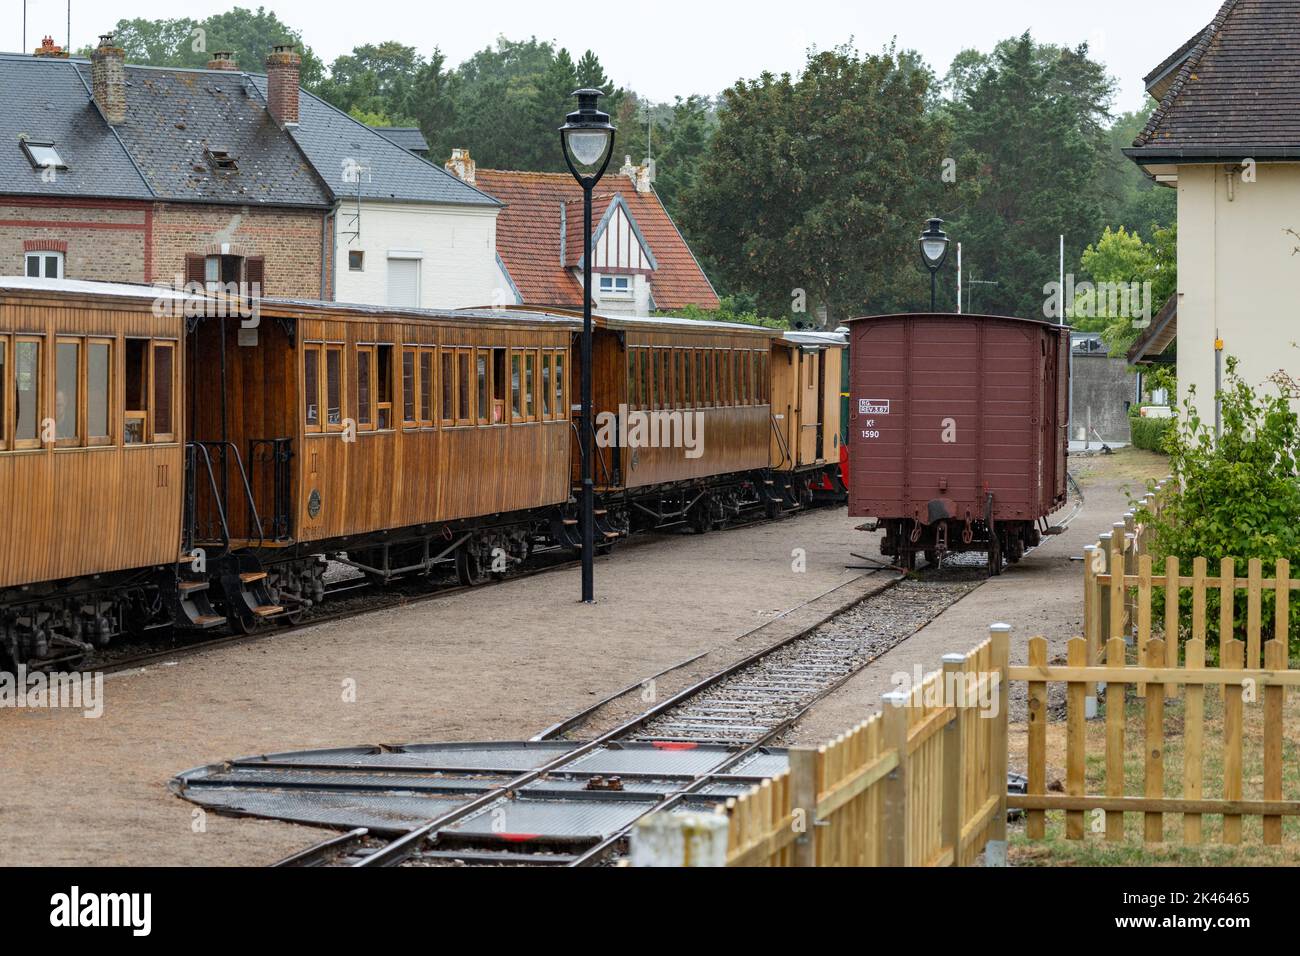 Steam locomotive of the Baie de Somme heritage railway. Stock Photo